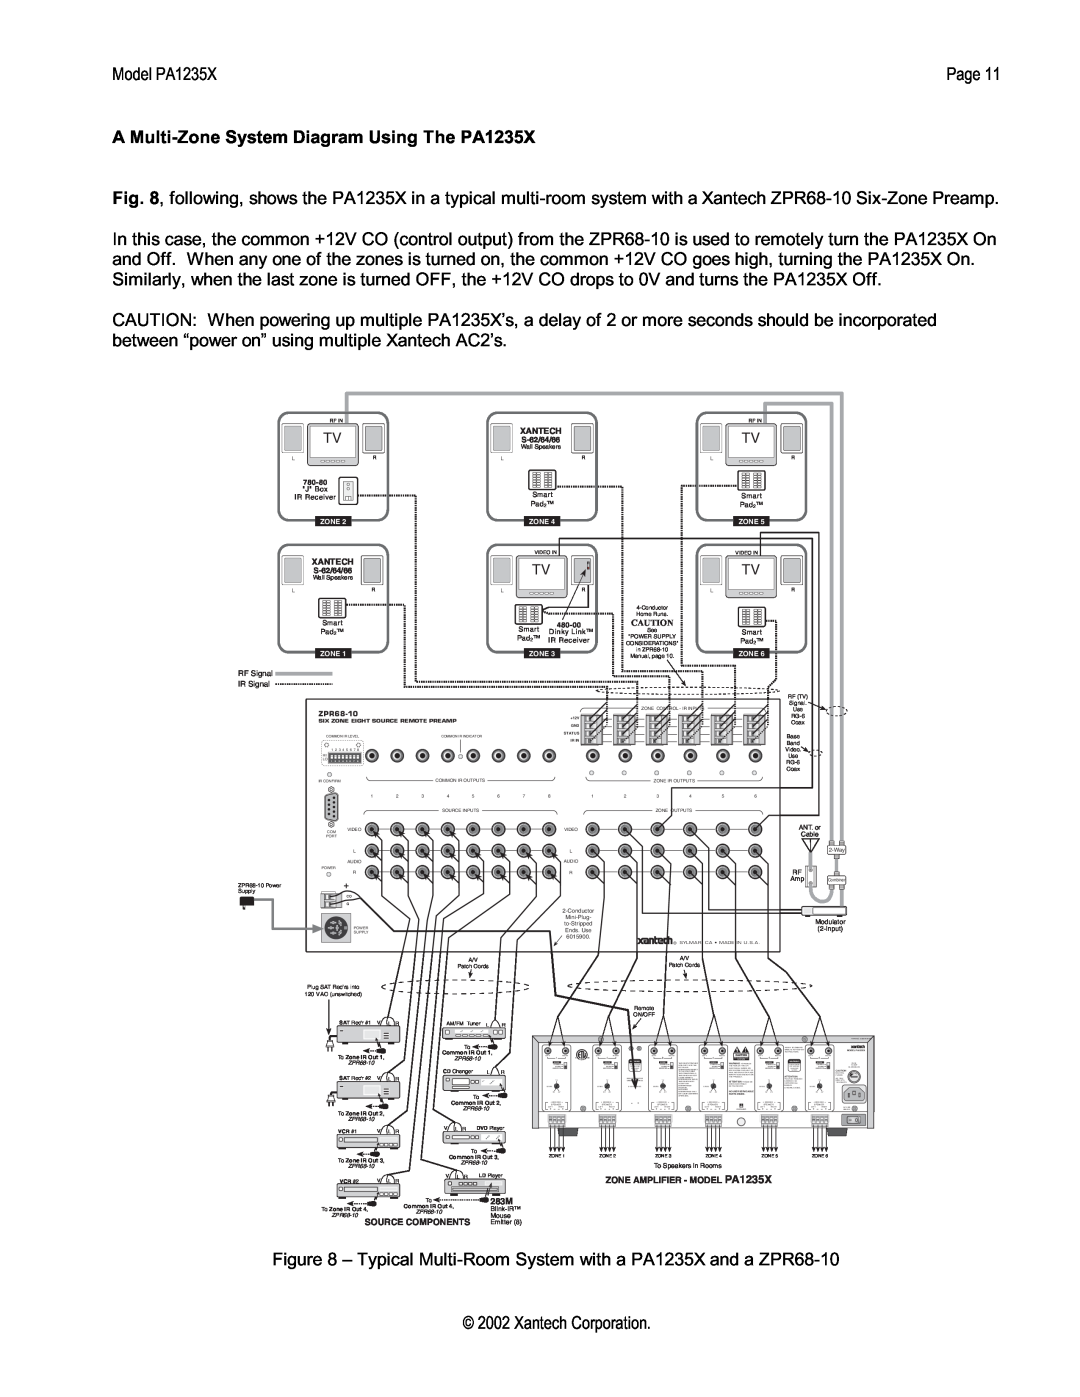 Xantech installation instructions A Multi-ZoneSystem Diagram Using The PA1235X 